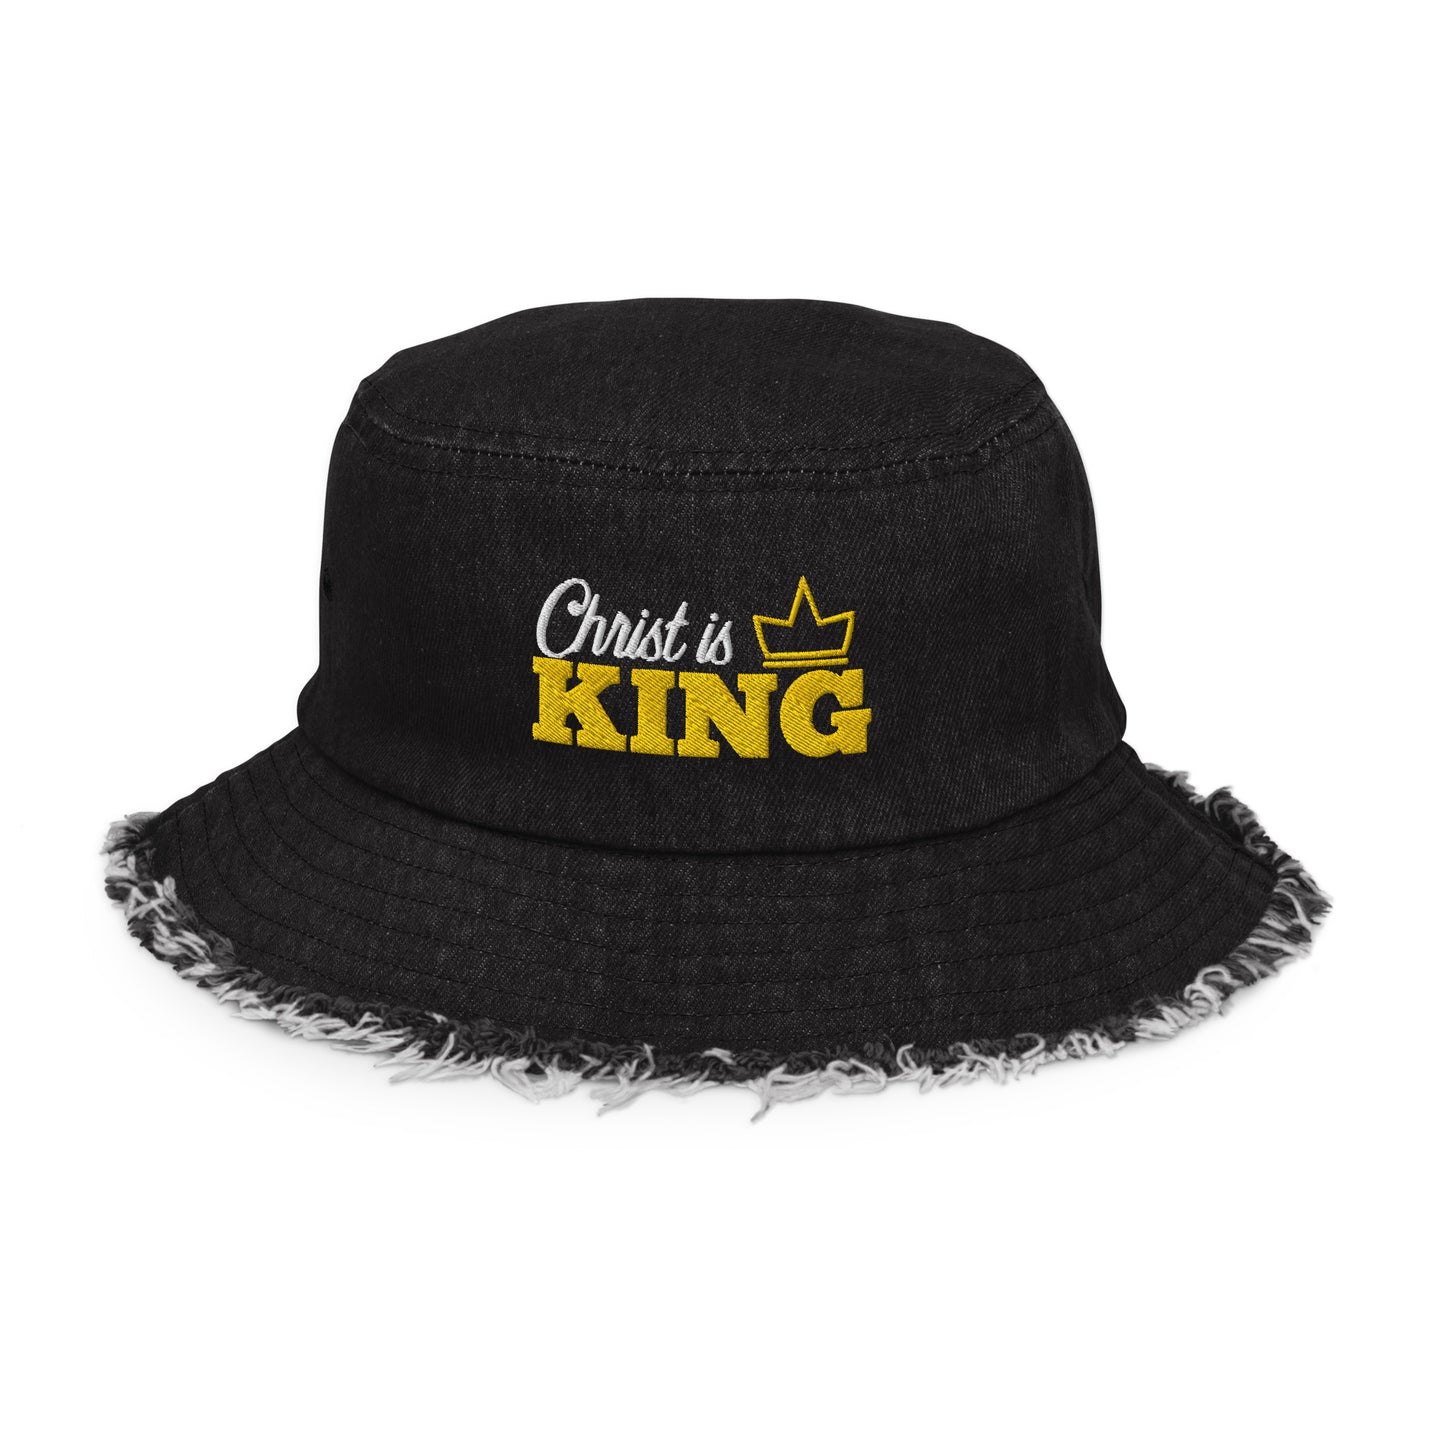 Christ is King! Distressed denim bucket hat